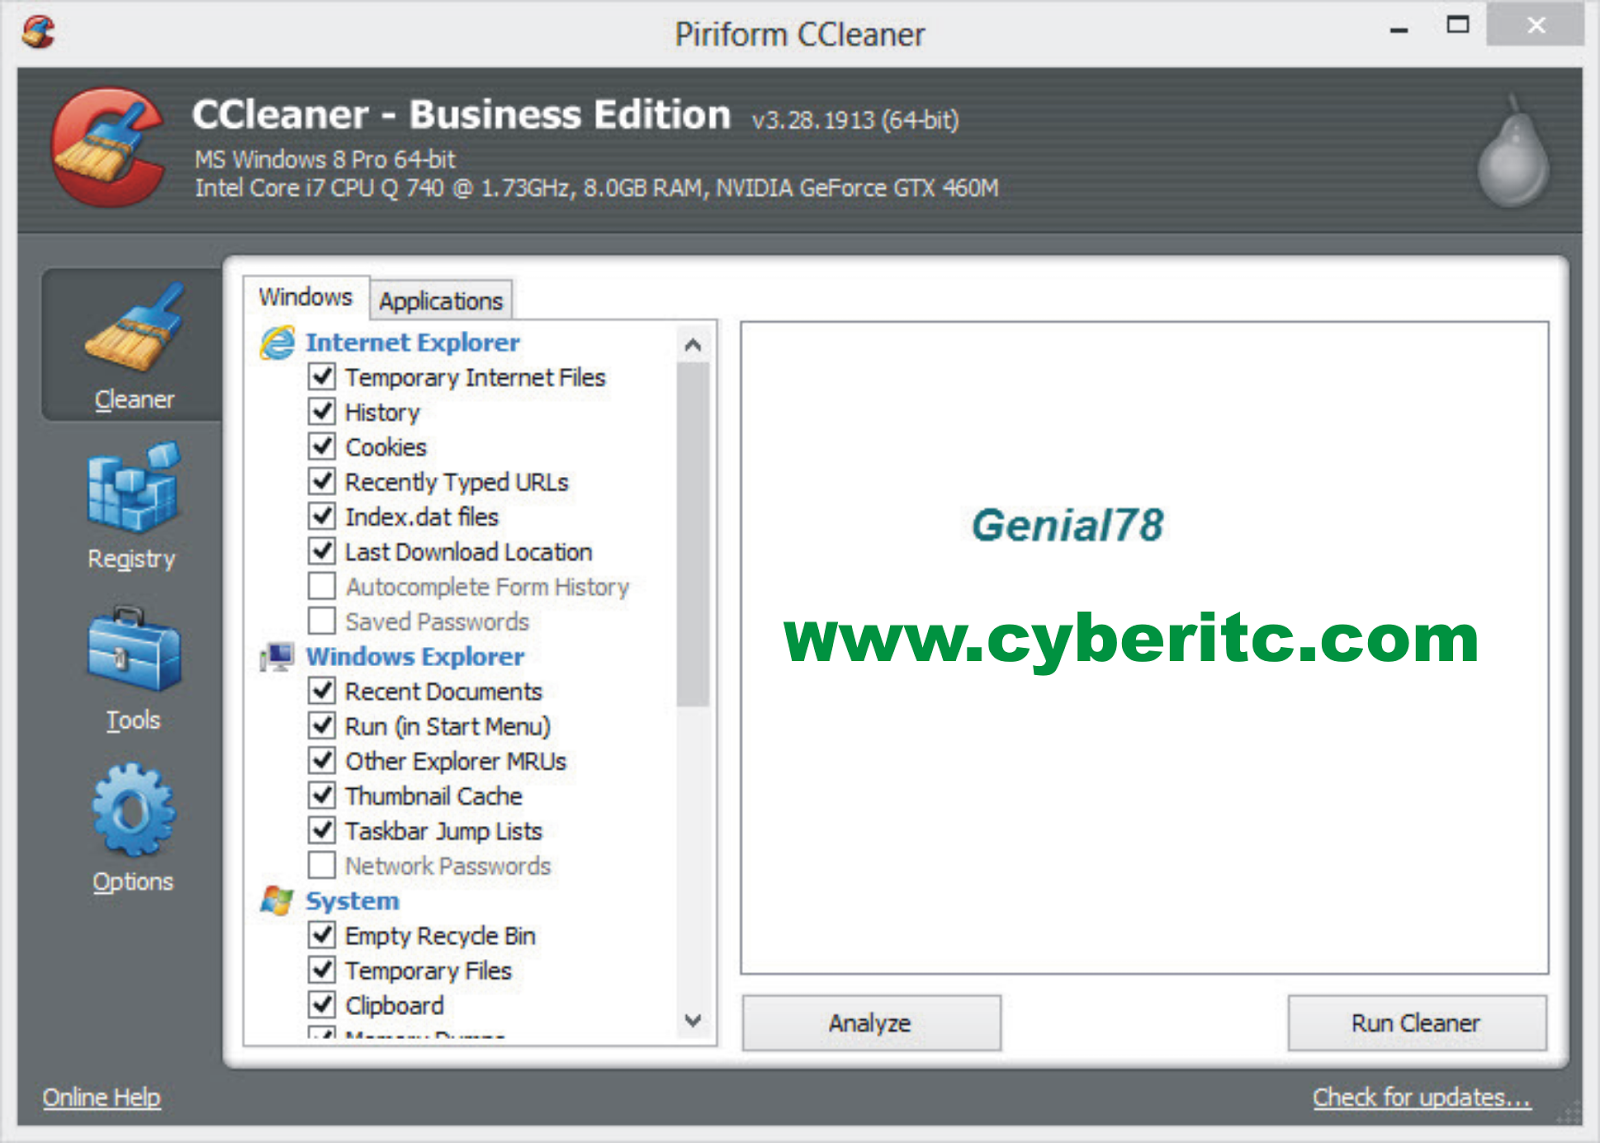 Download ccleaner pc 02 cesarean section - Stingray ccleaner new version for windows 8 hekel installer